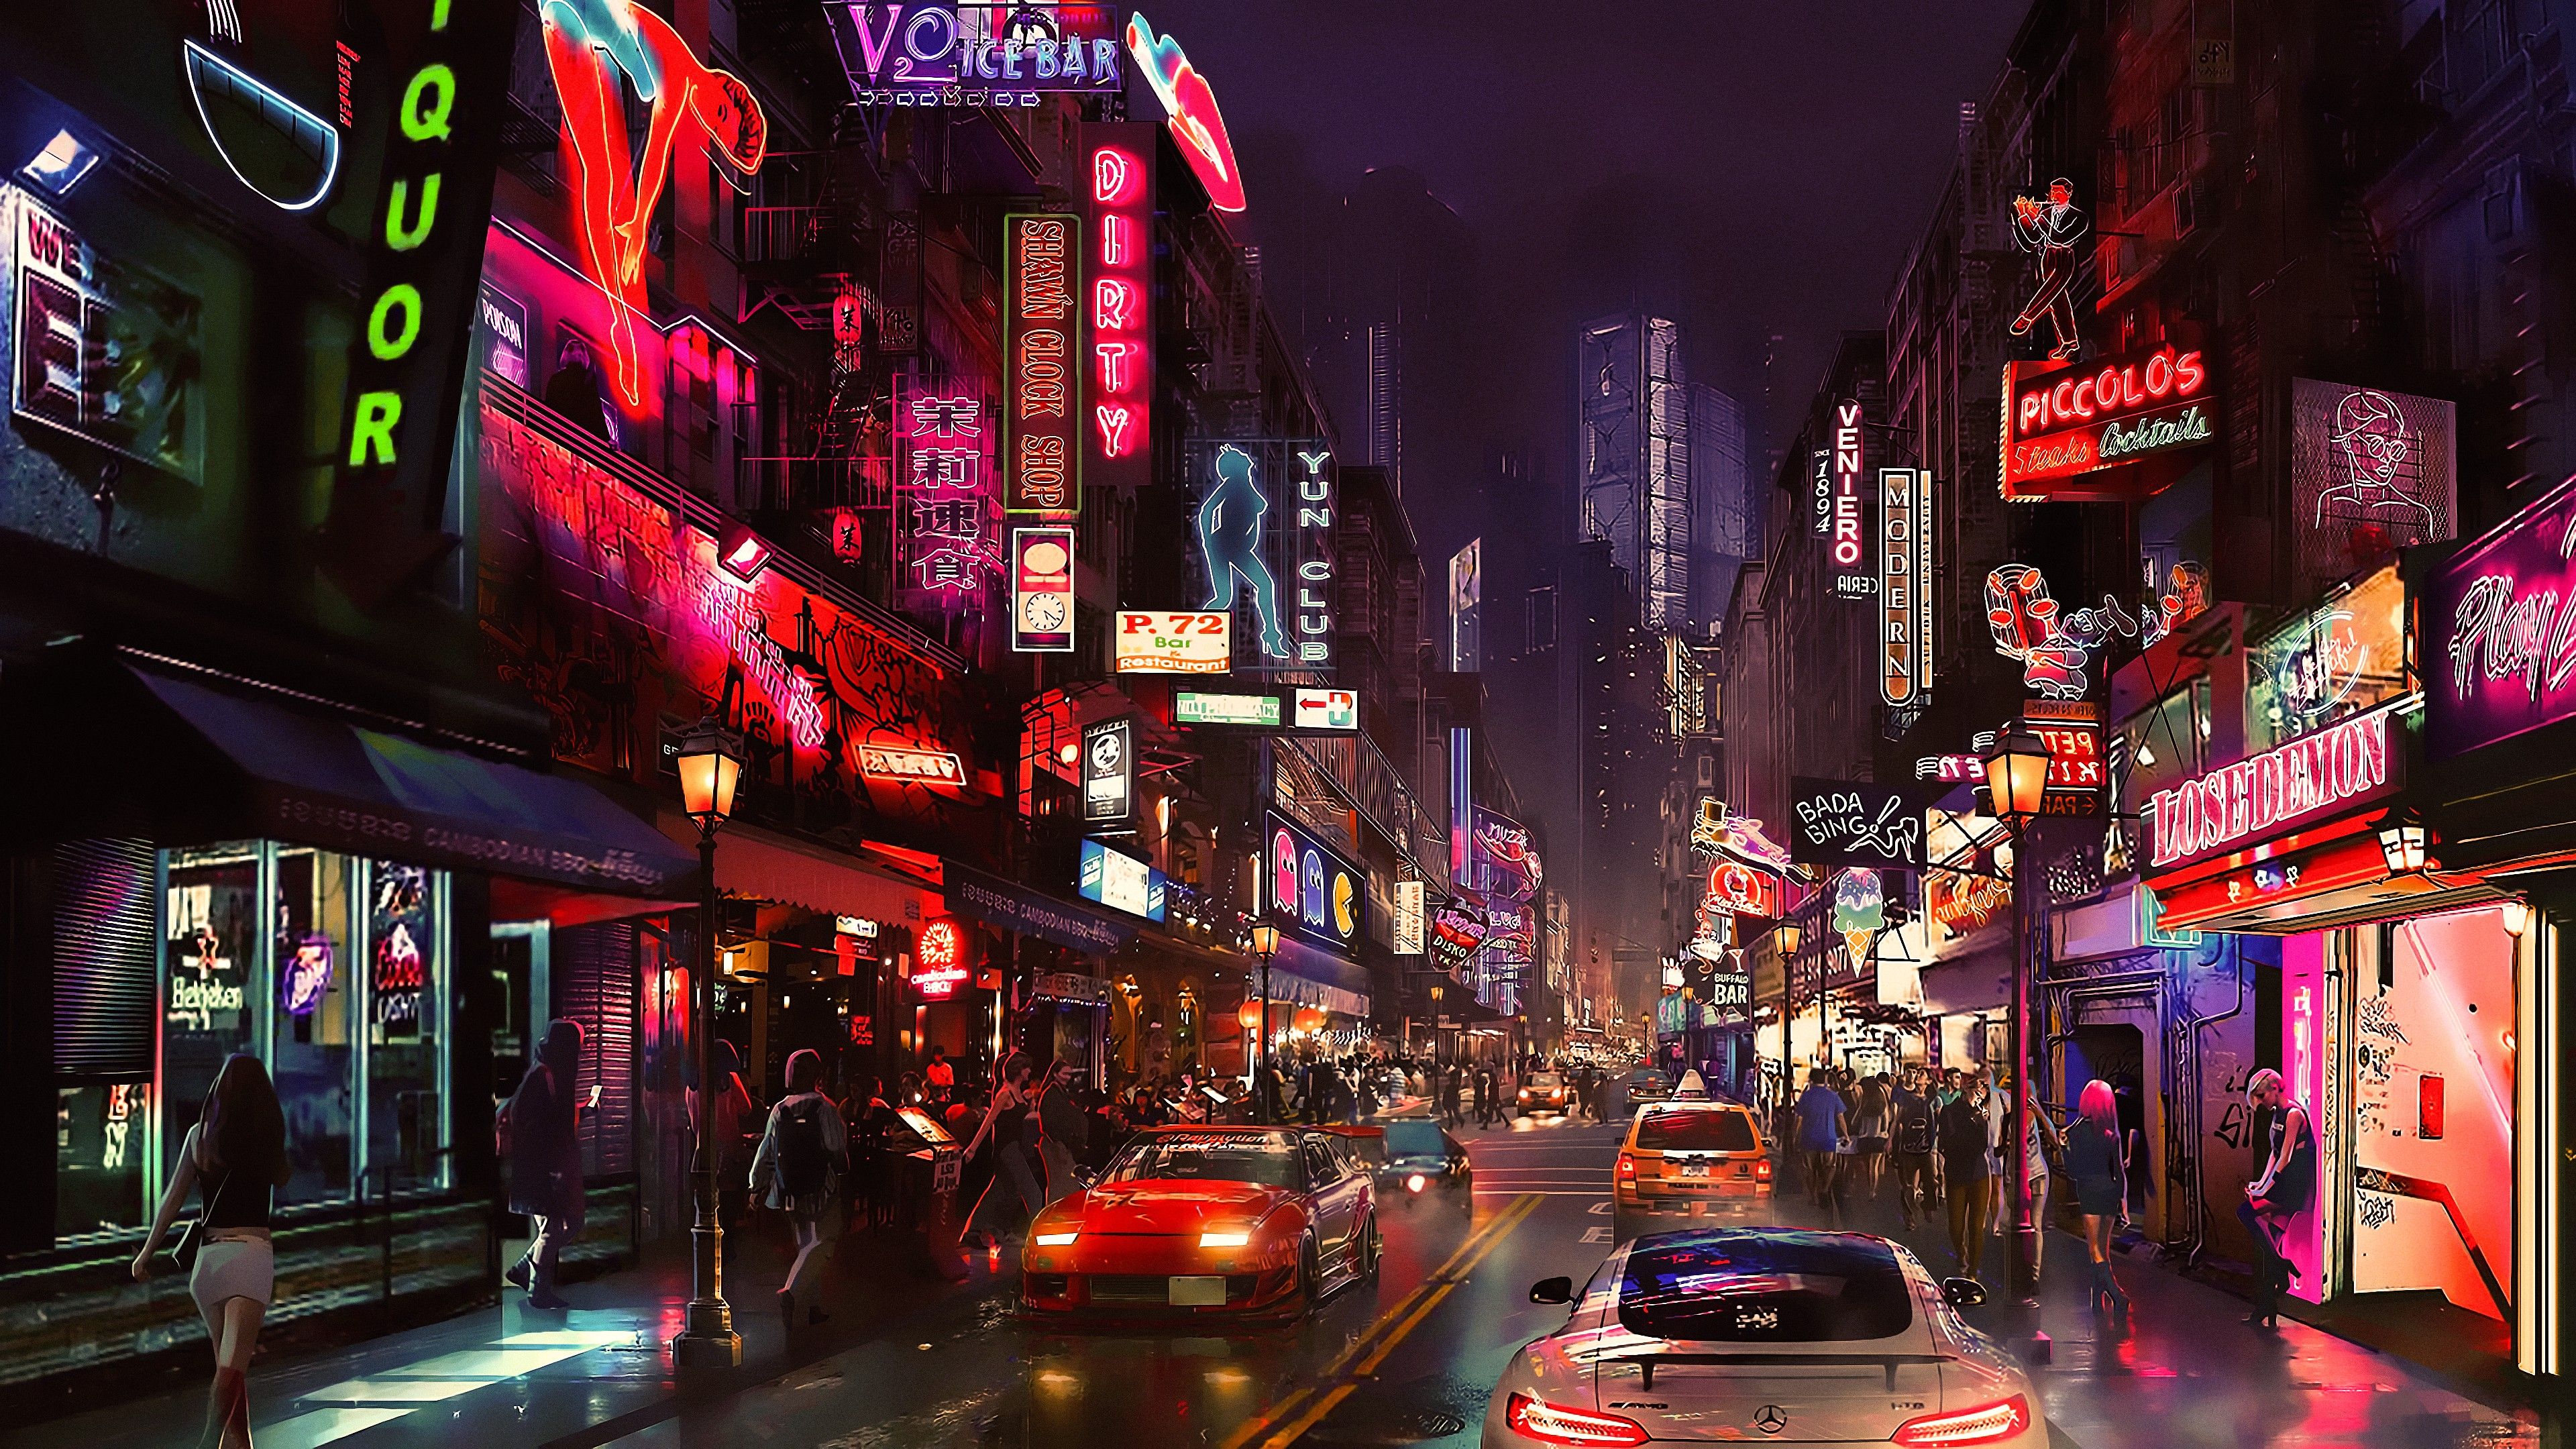 cyberpunk future world 4K. Futuristic city